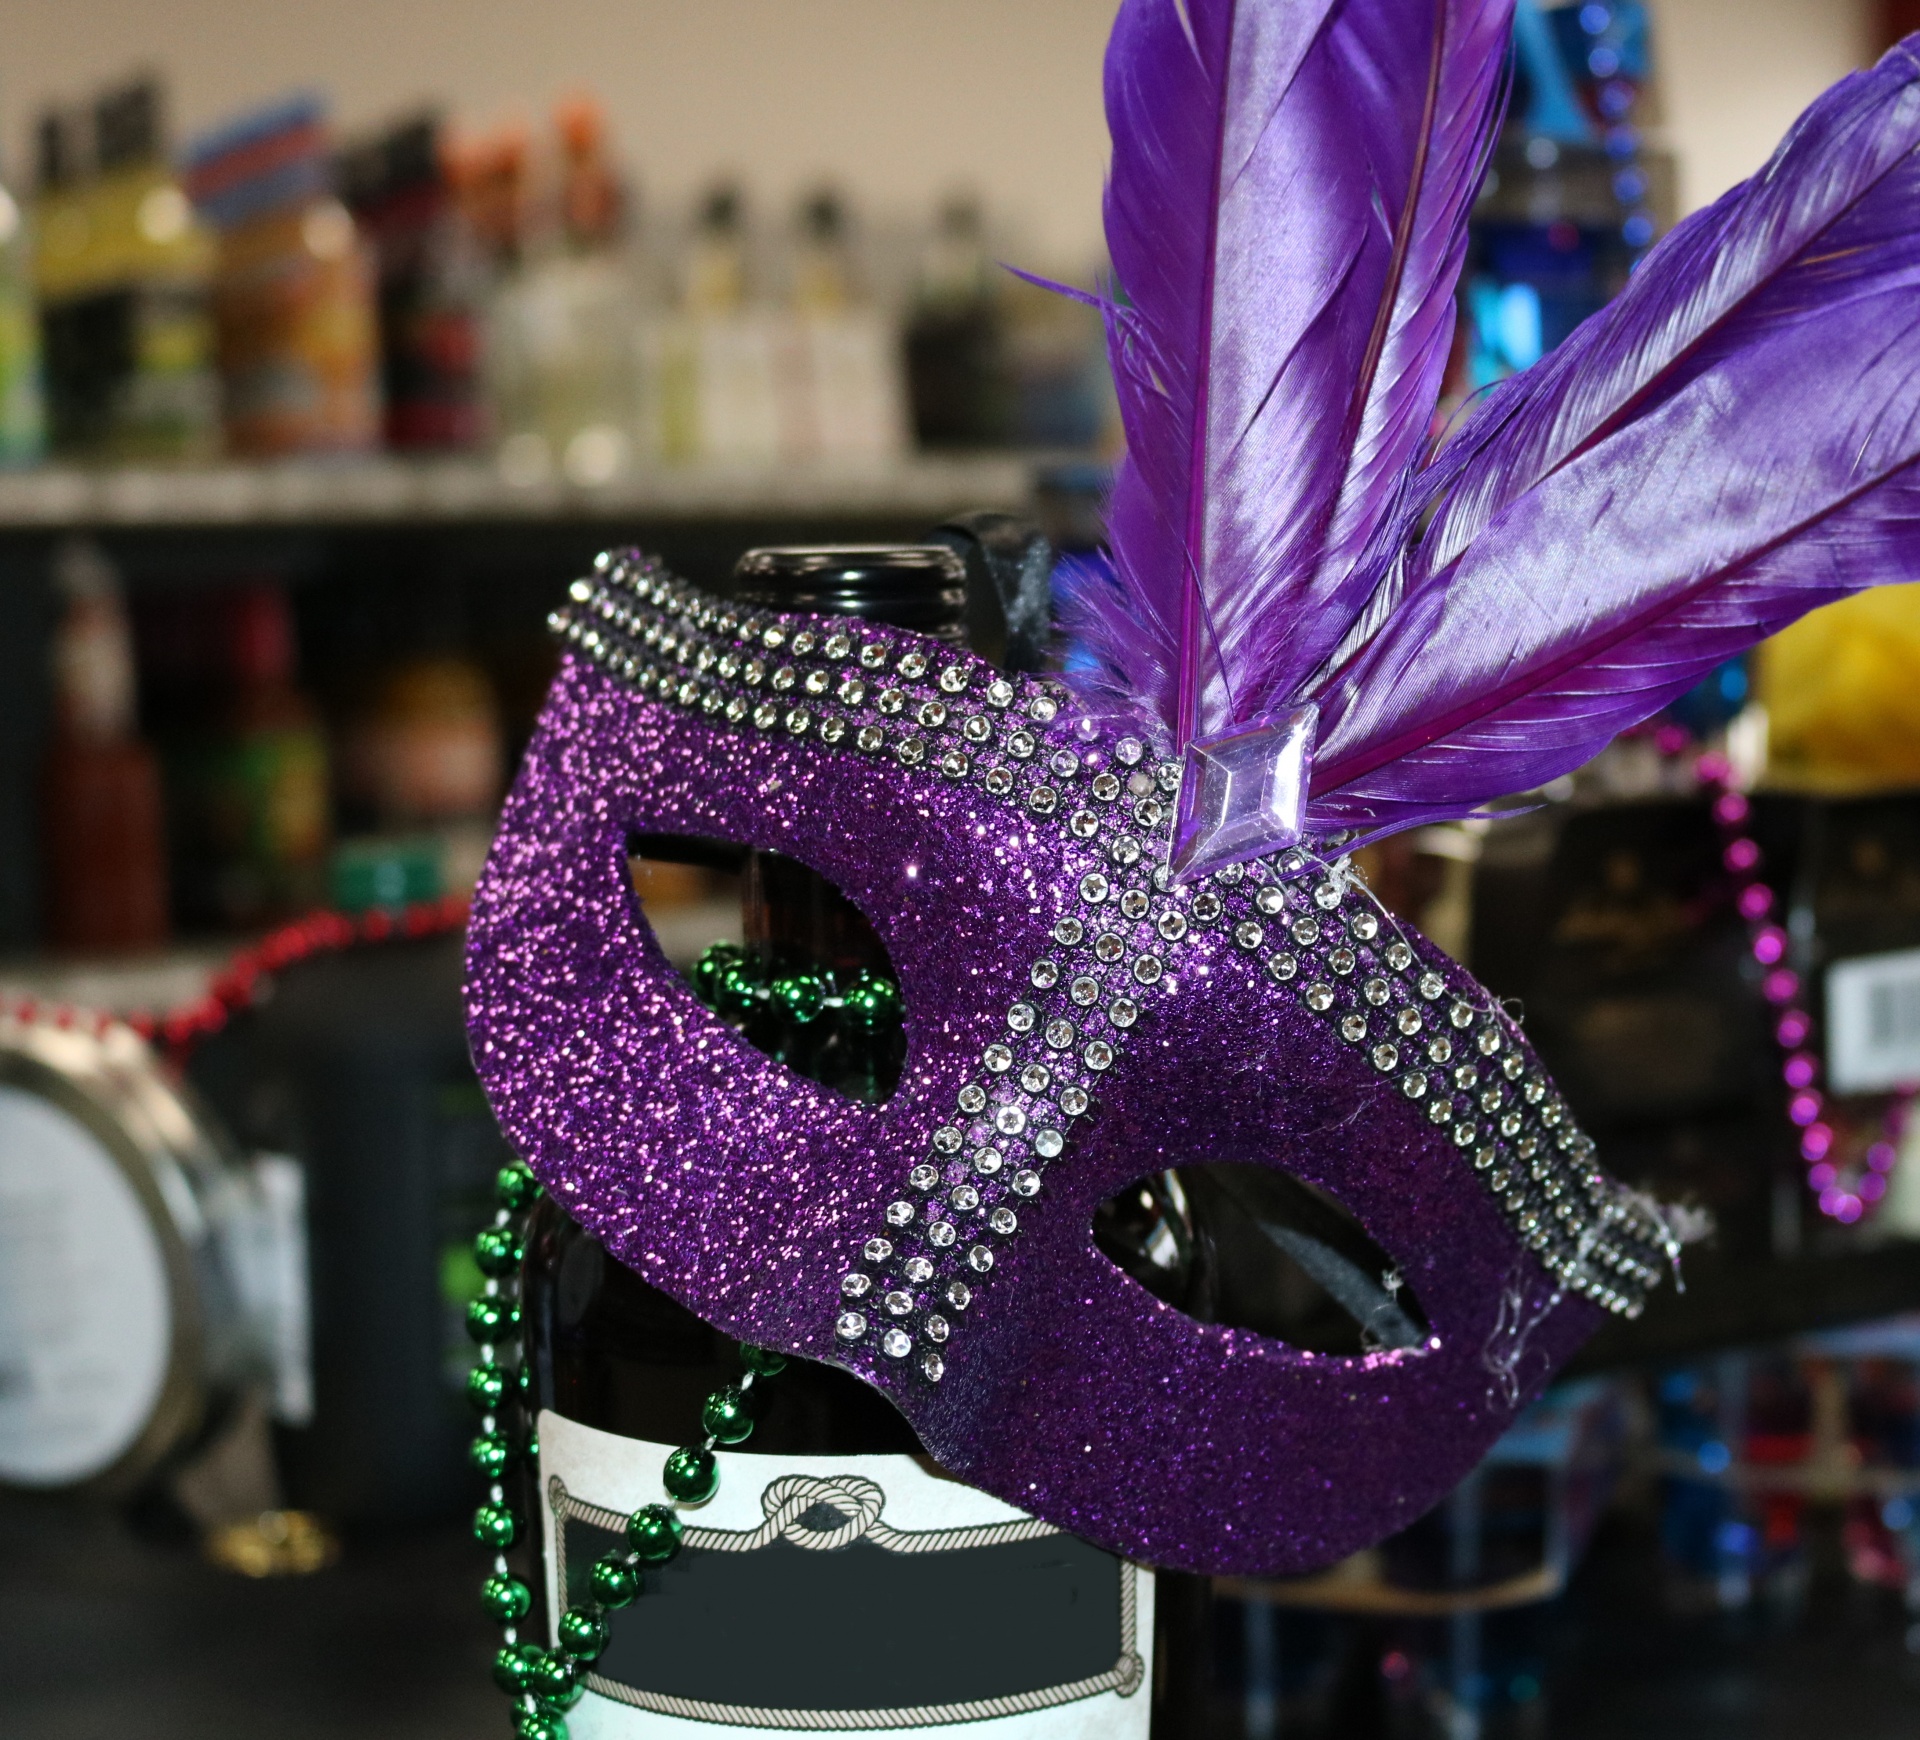 Close-up of a glittery purple Mardi Gras mask hanging on a bottle of wine inside a liquor store.